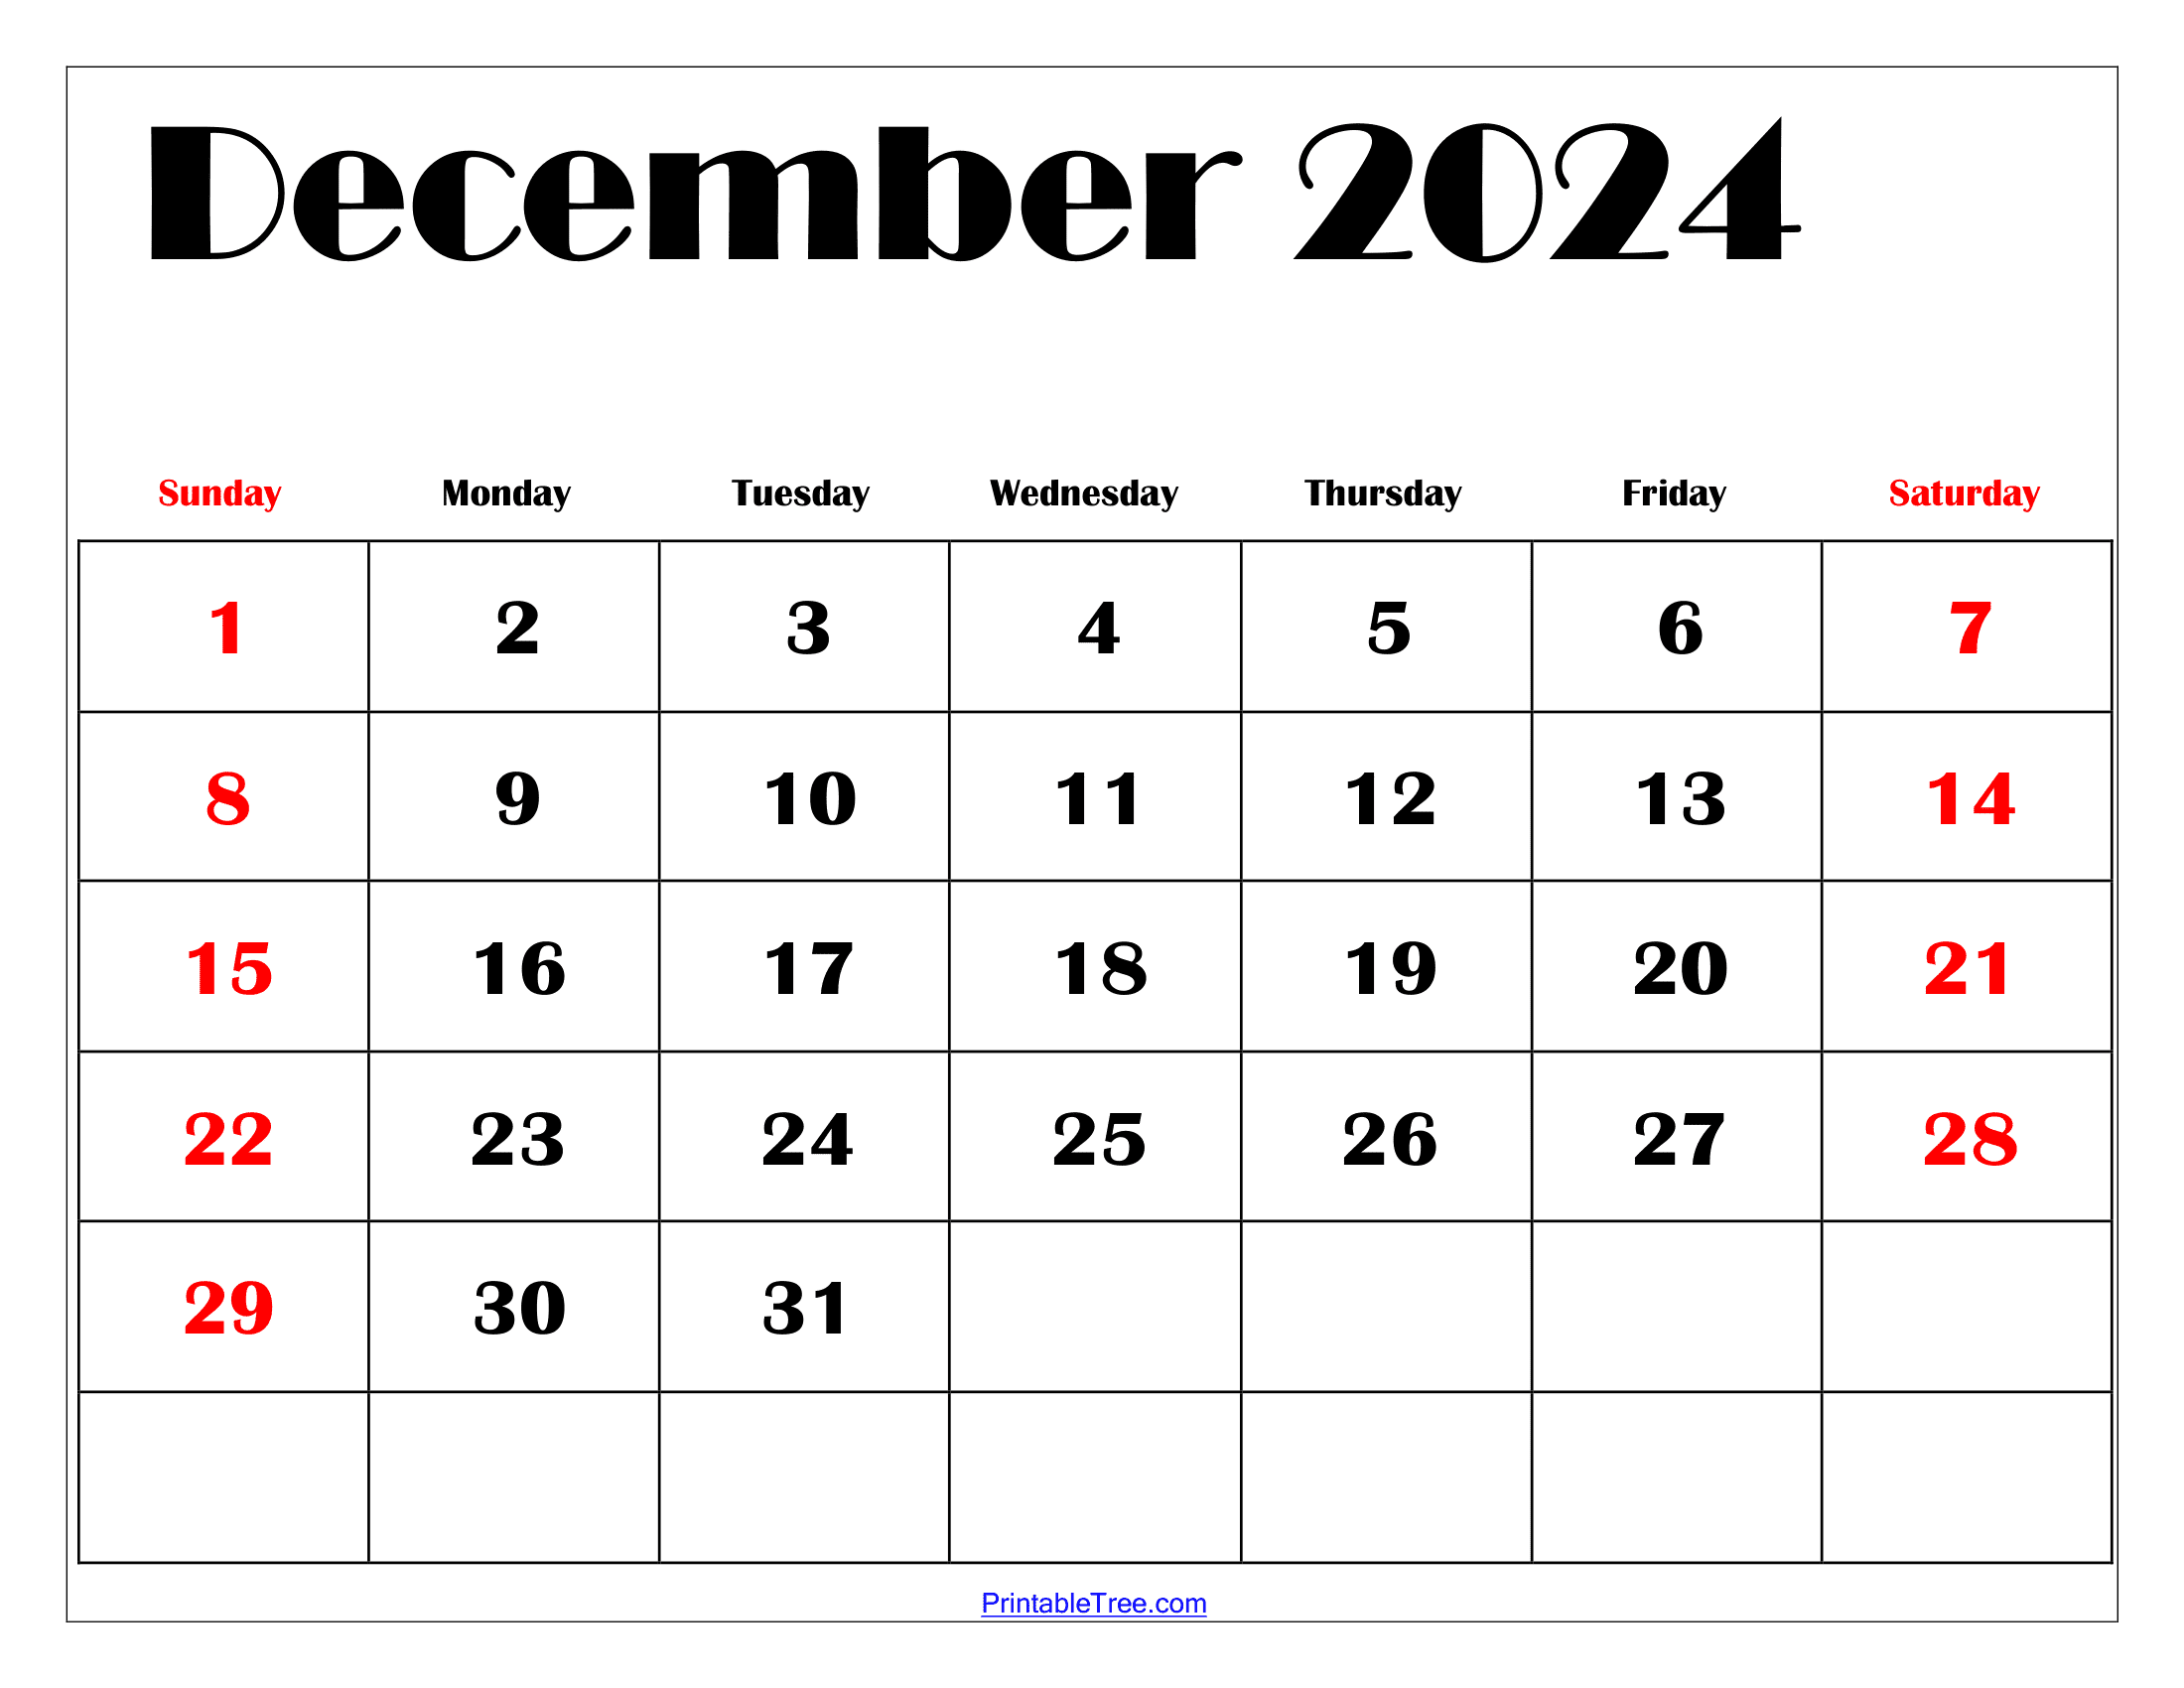 December 2024 Calendar Printable Pdf Blank Free Templates pertaining to Free Printable Calendar 2024 Deember